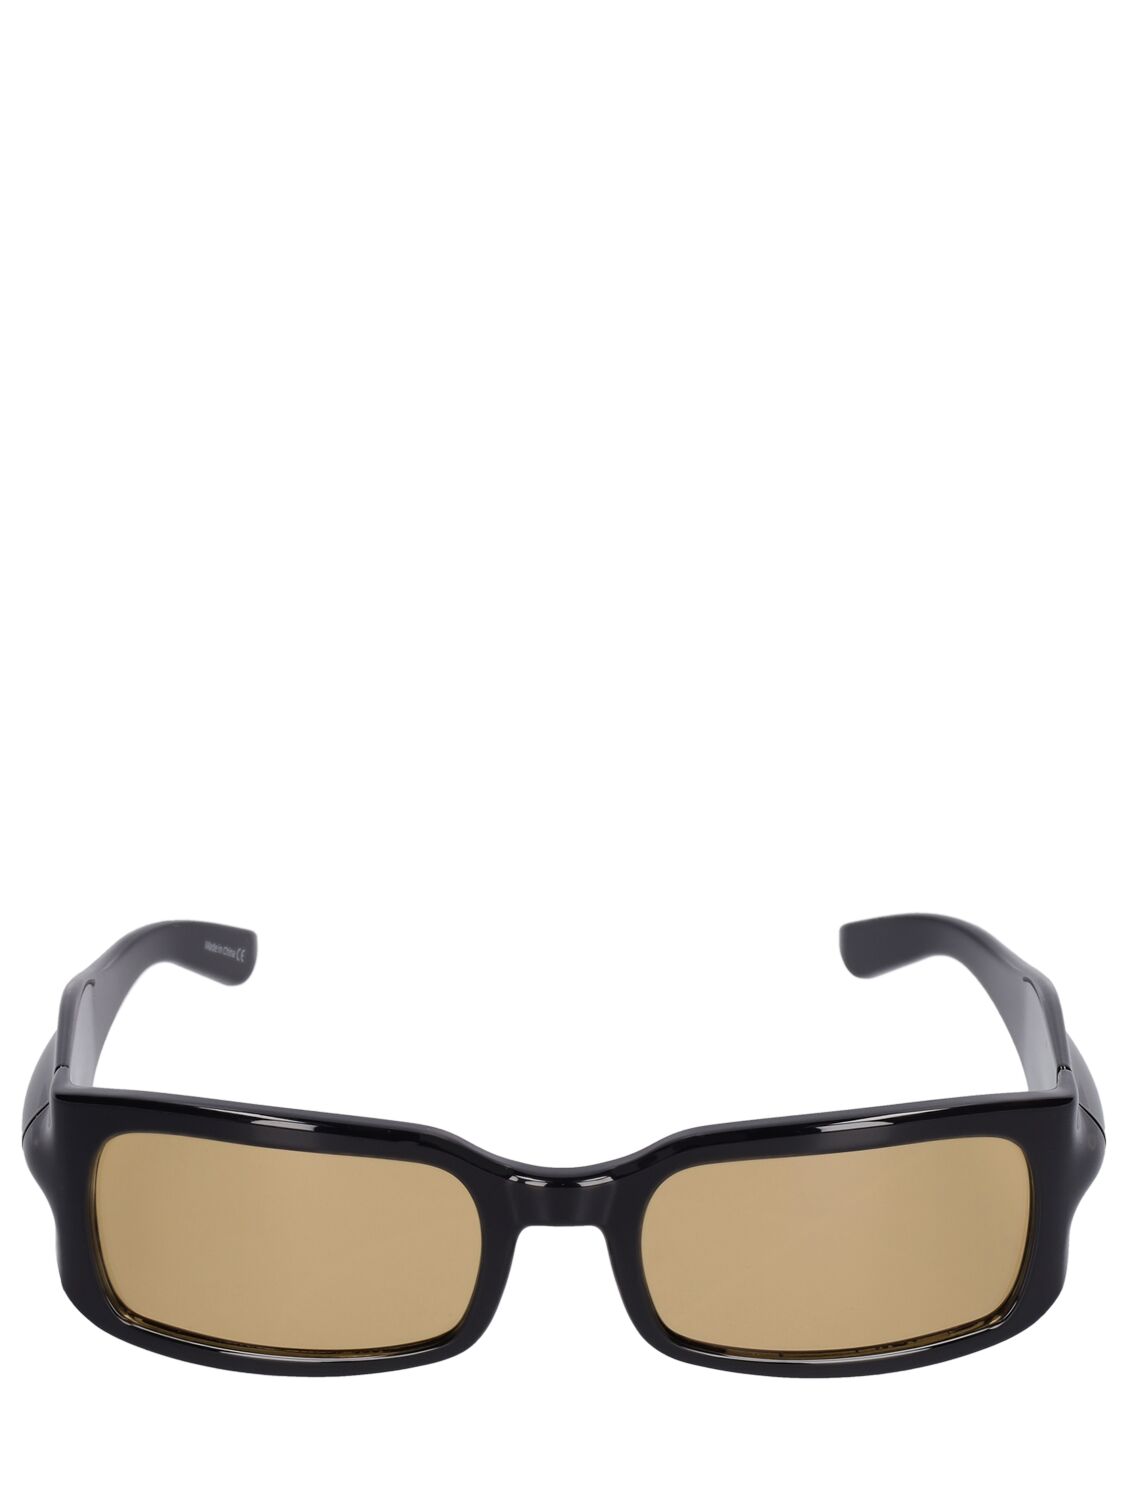 Image of Gloop Black Amber Sunglasses